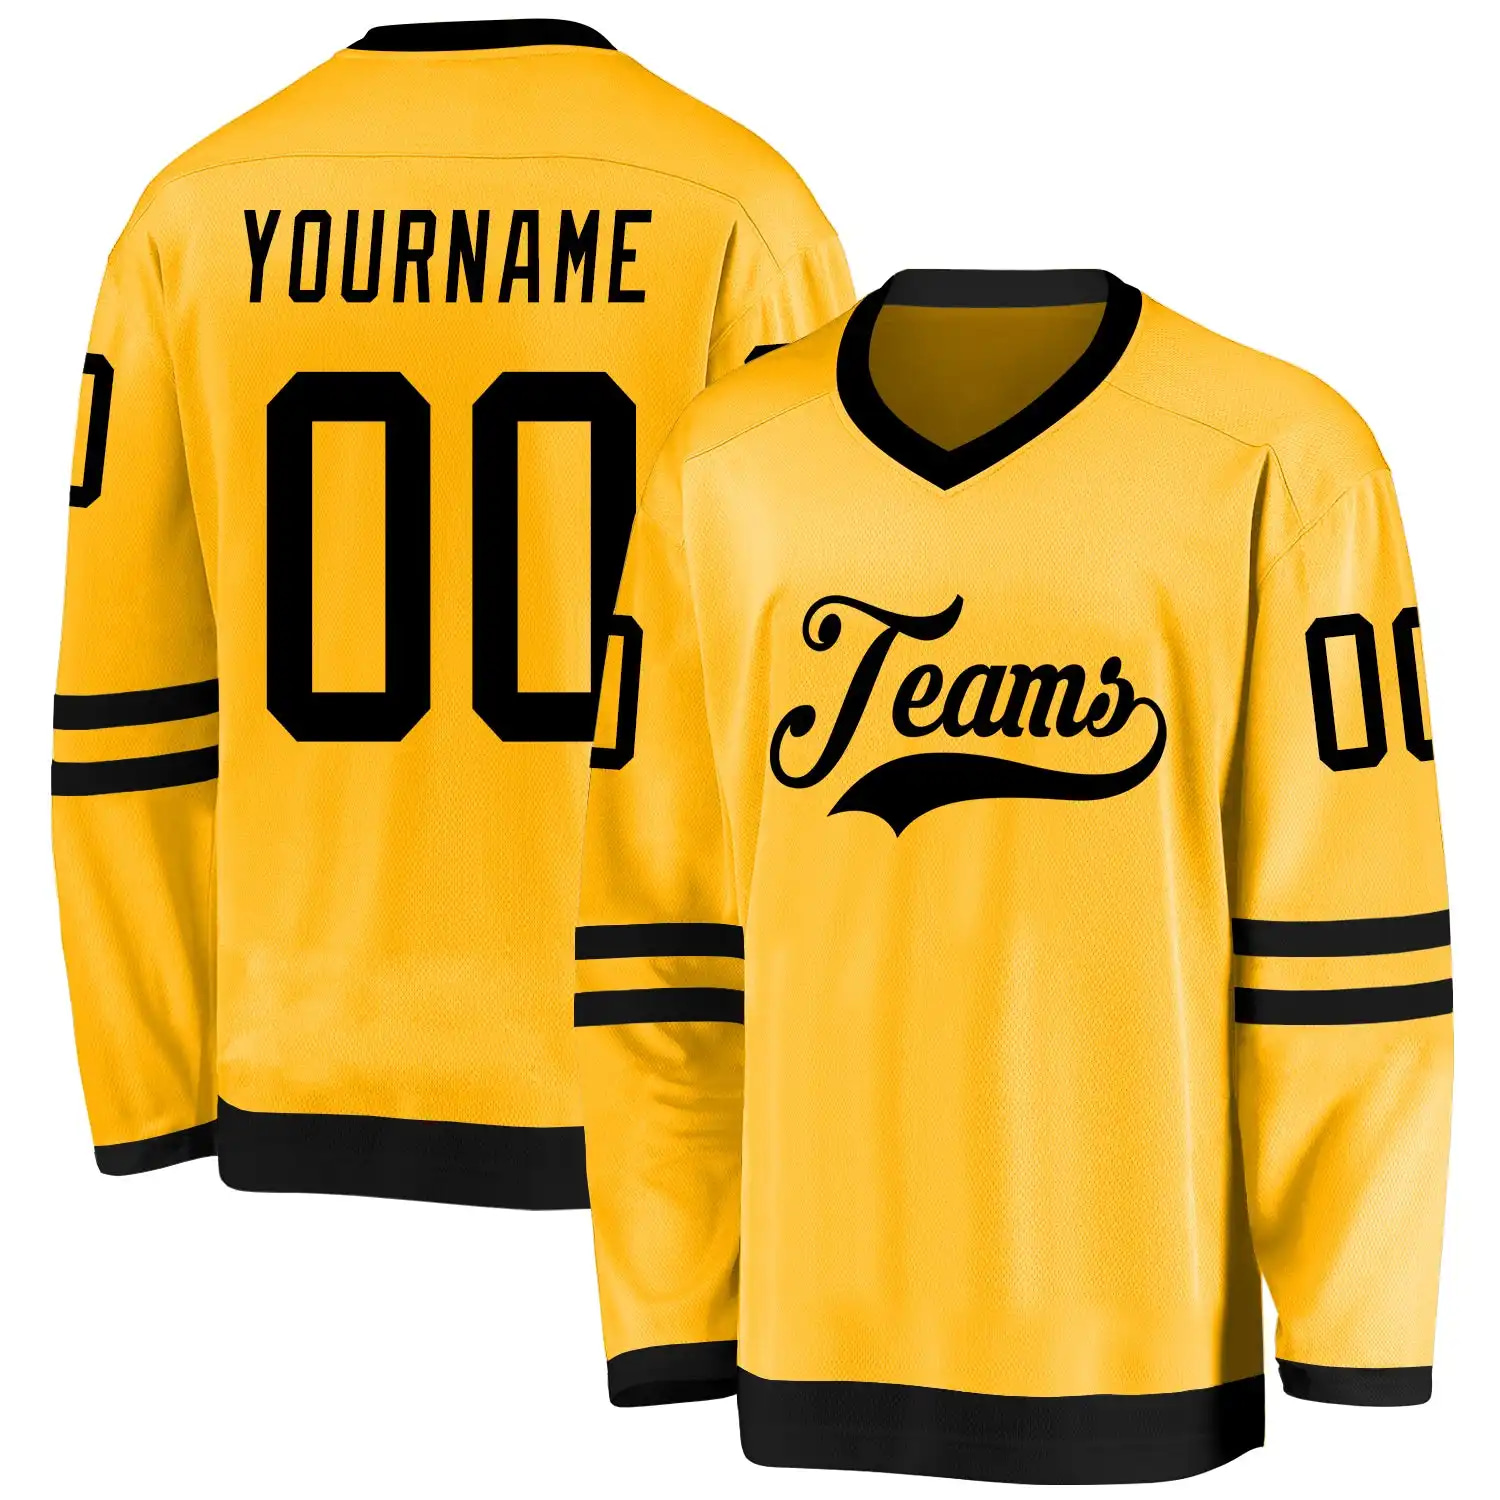 Stitched And Print Gold Black Hockey Jersey Custom